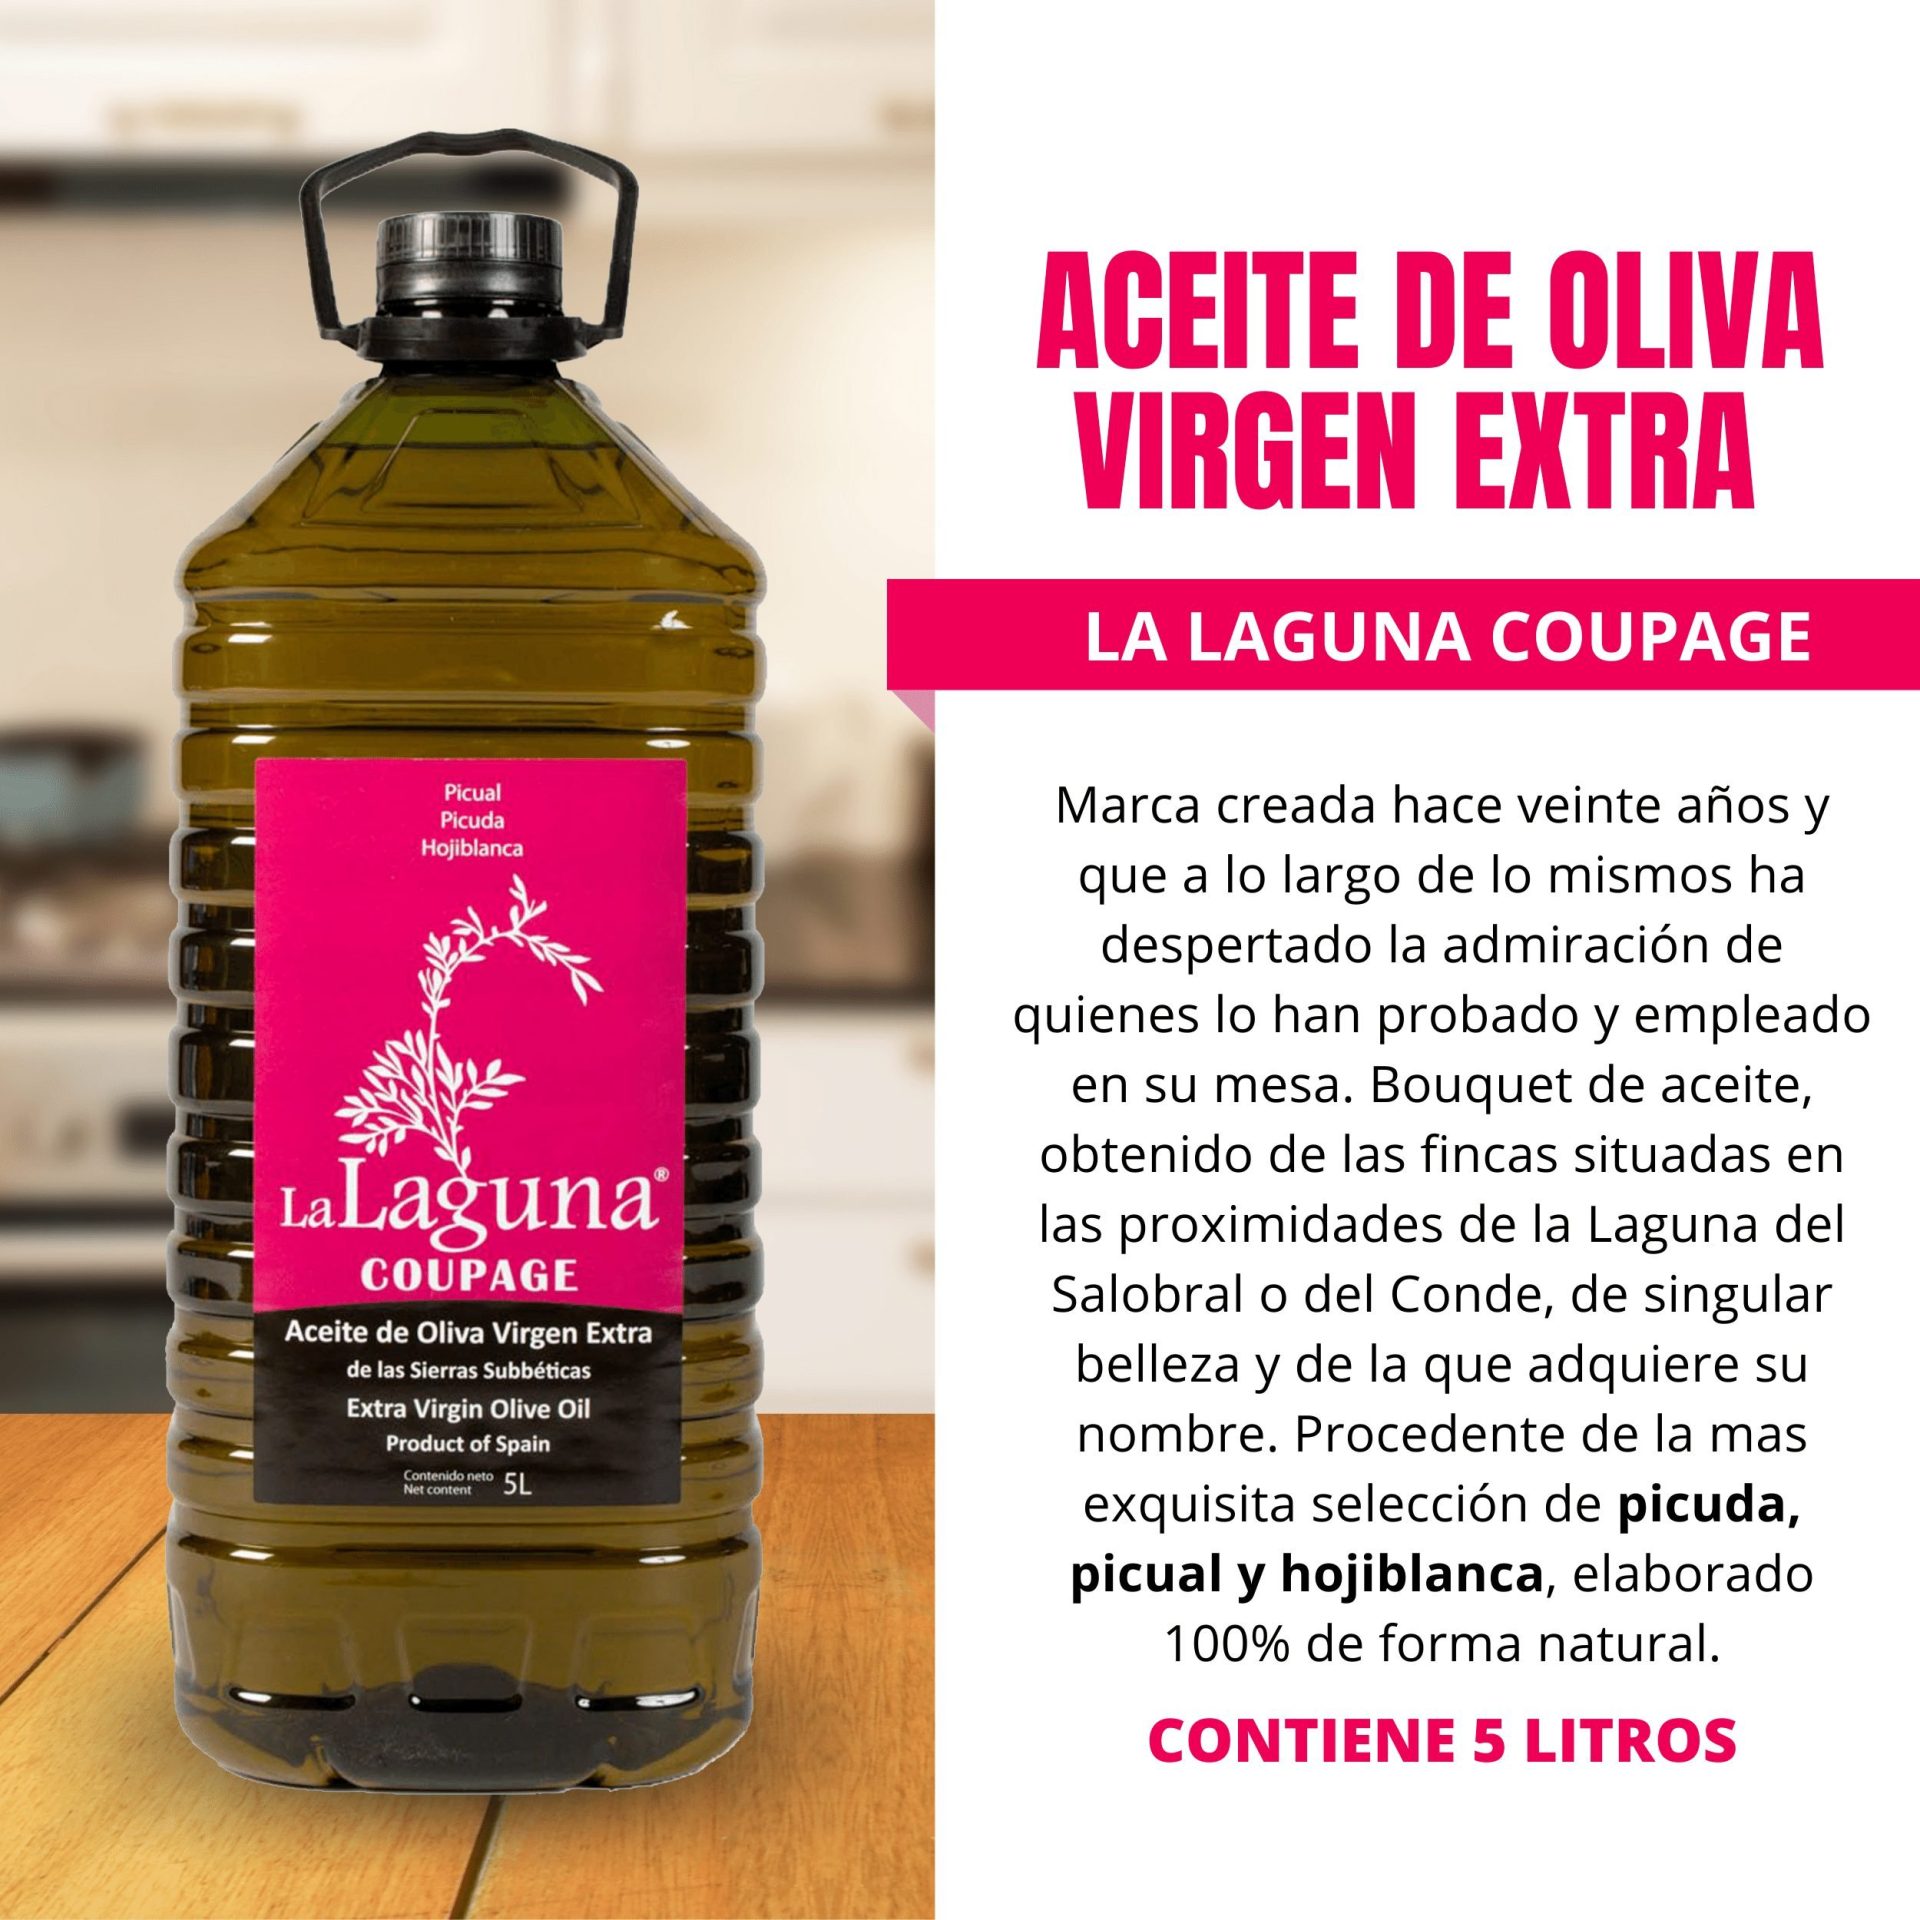 LA LAGUNA Aceite De Oliva Virgen Extra Coupage Garrafa Pet 5 Lts.